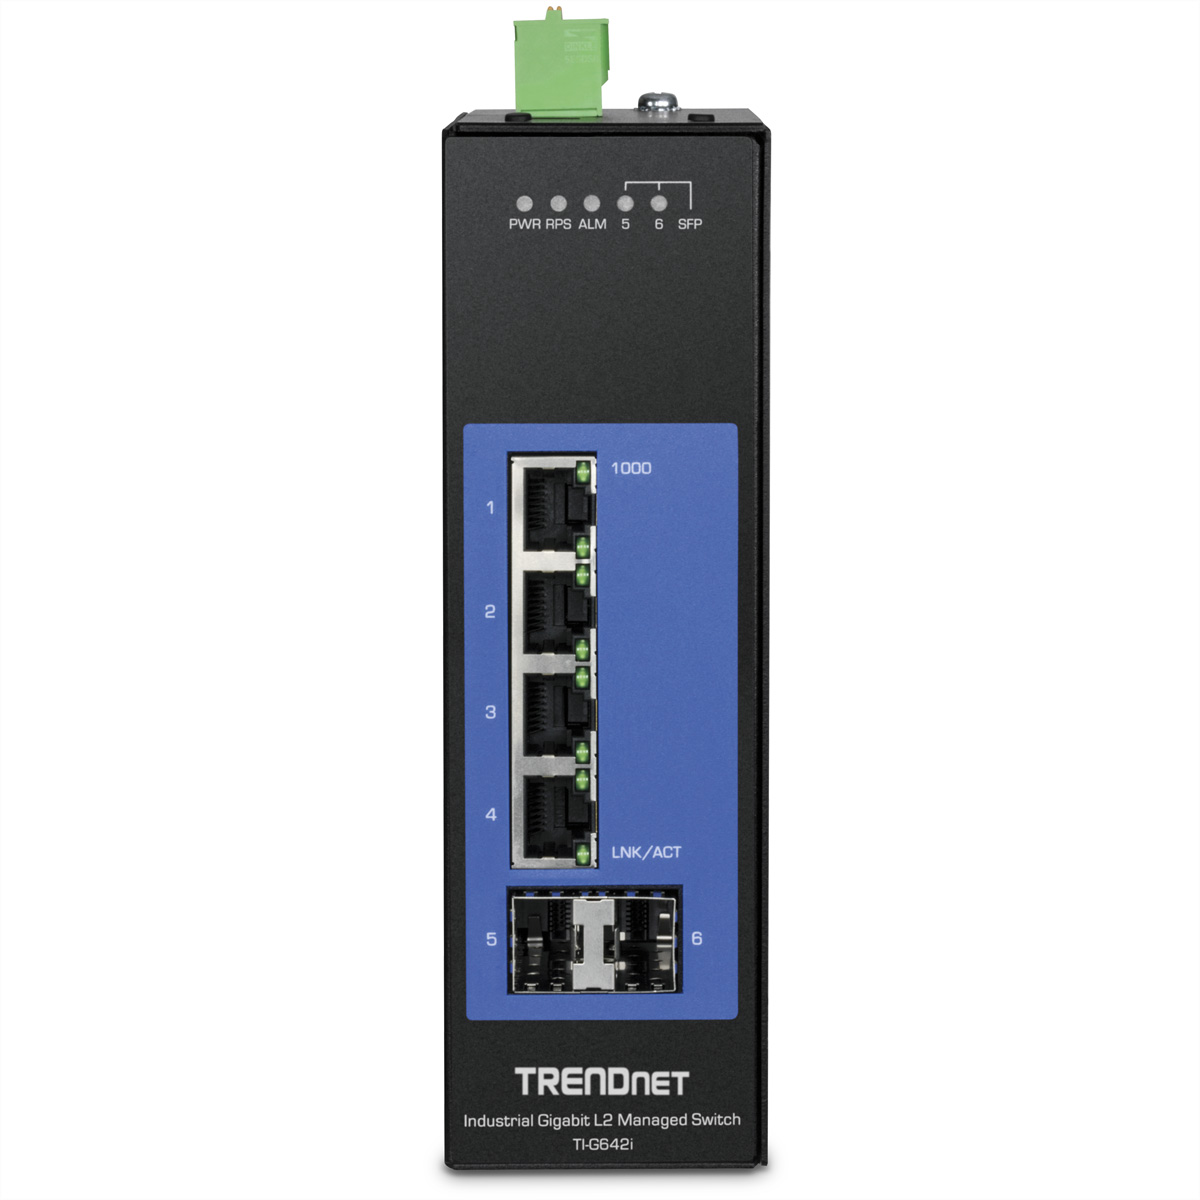 TRENDNET DIN-Rail Switch Gigabit Ethernet Industrial L2 Gigabit 6-Port TI-G642i Switch